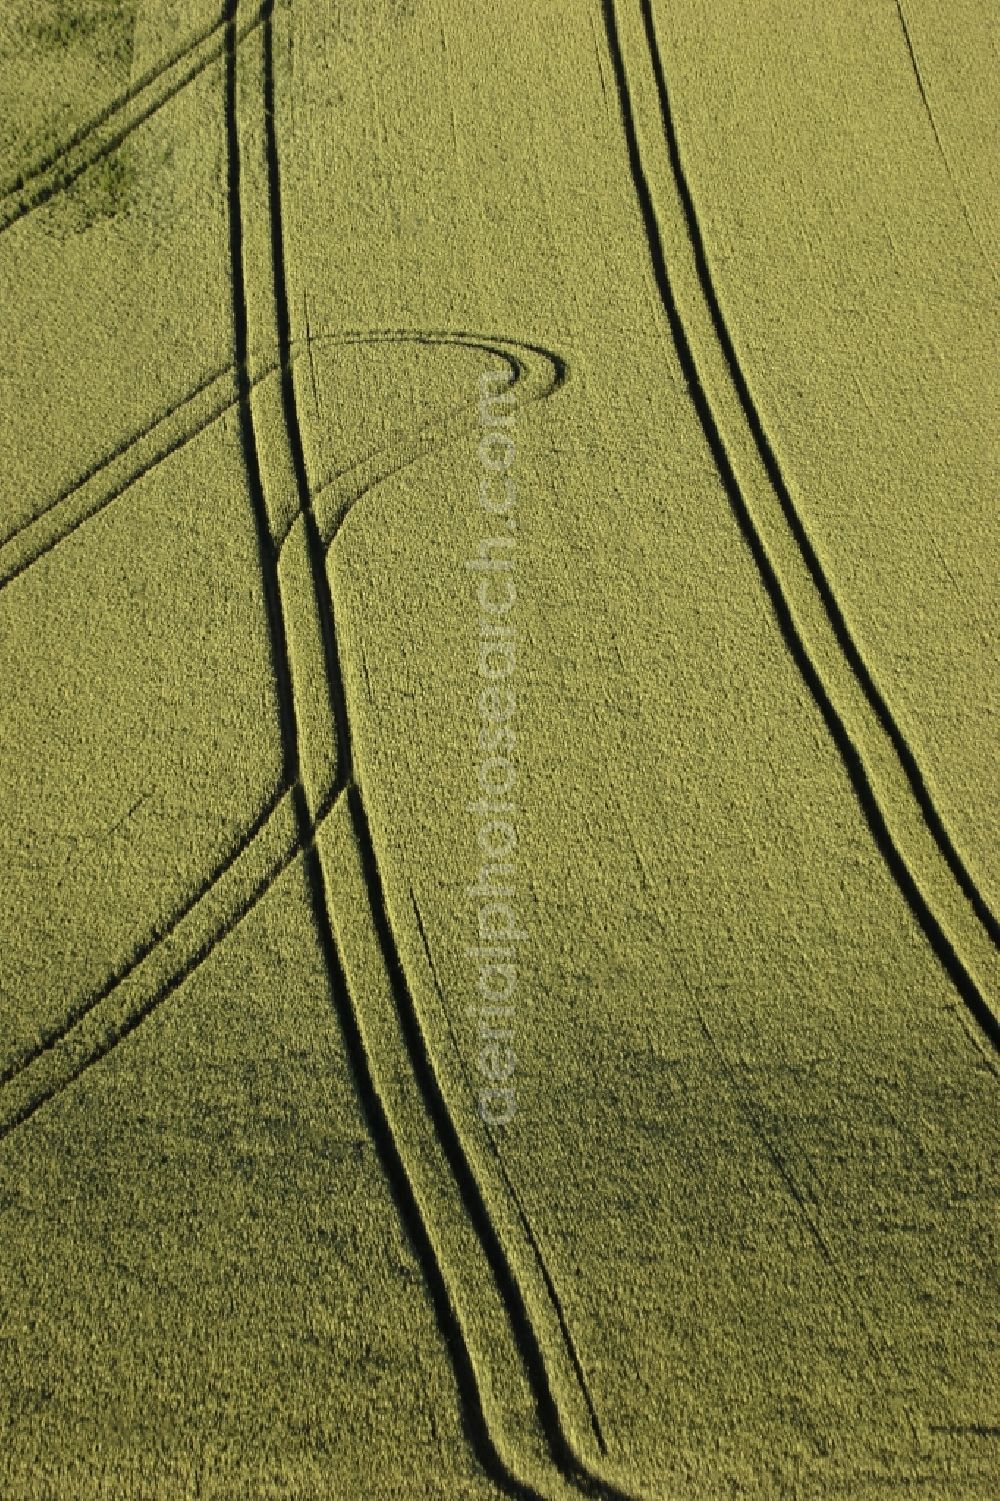 Aerial photograph Felm - Lanes in cornfield in Altenholz in Schleswig-Holstein